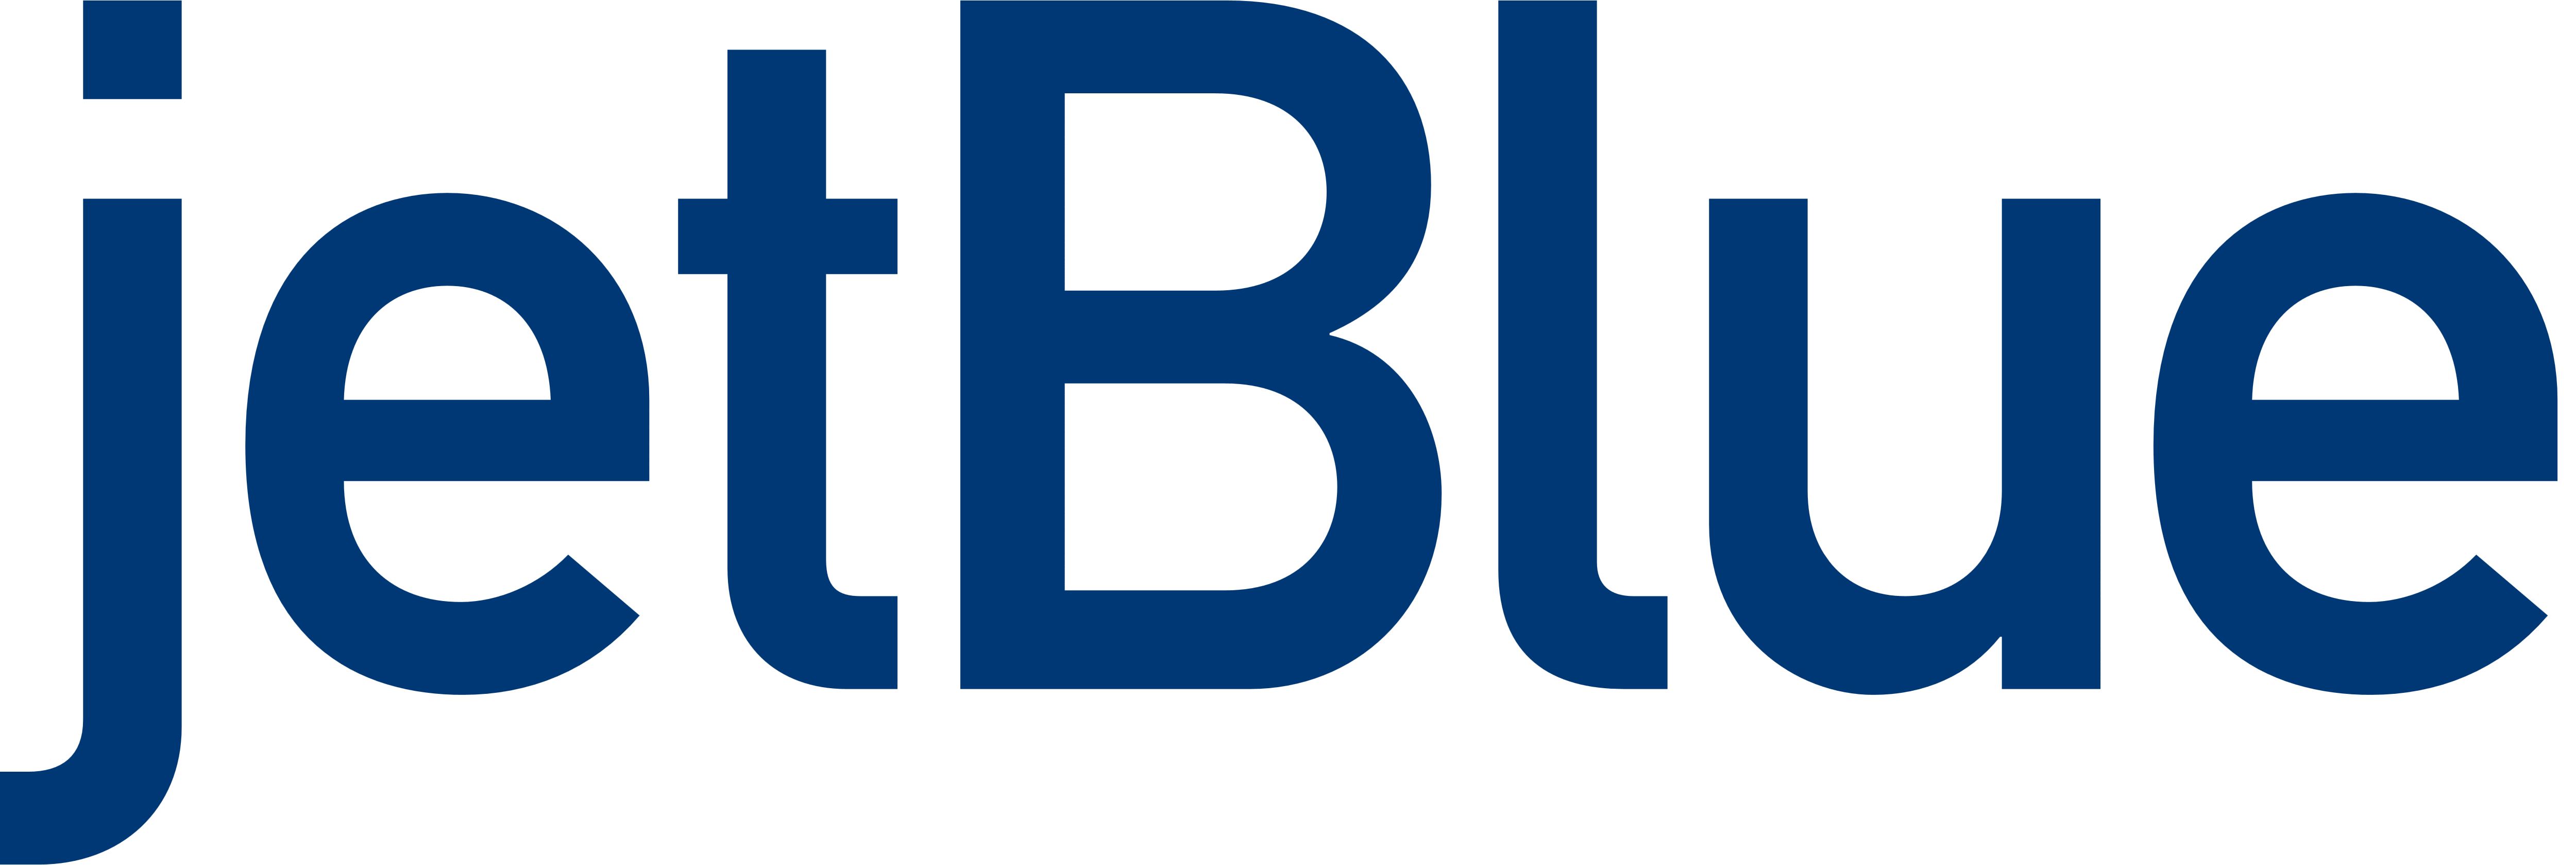 JetBlue Airlines Logo